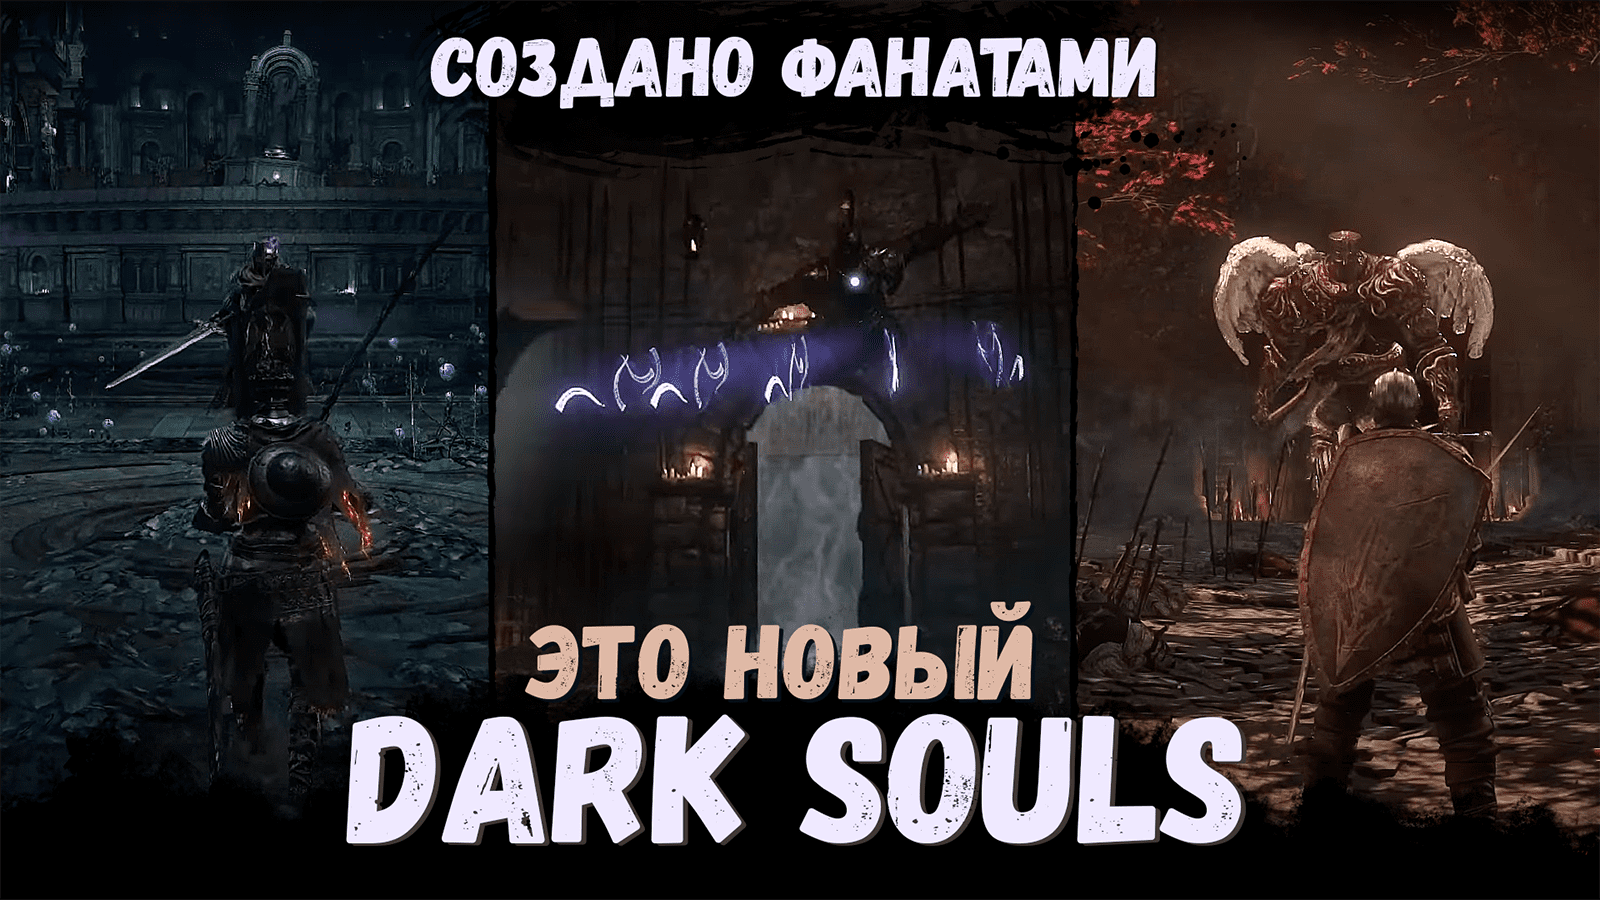 Dark souls archthrones mod